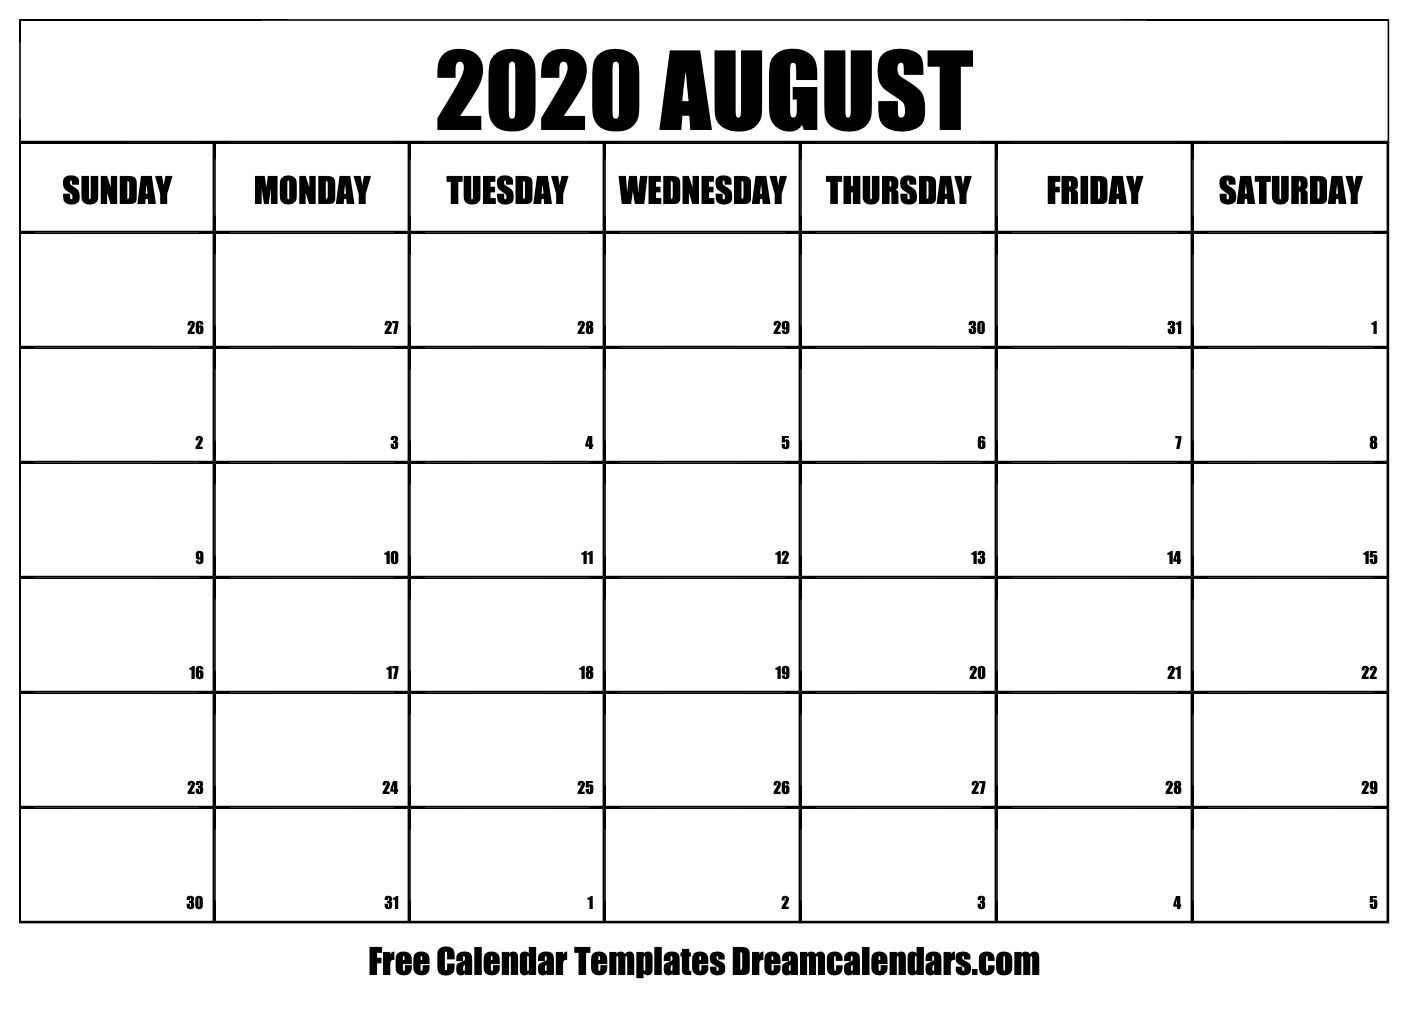 Free download August 2020 Printable Calendar Dream Calendars